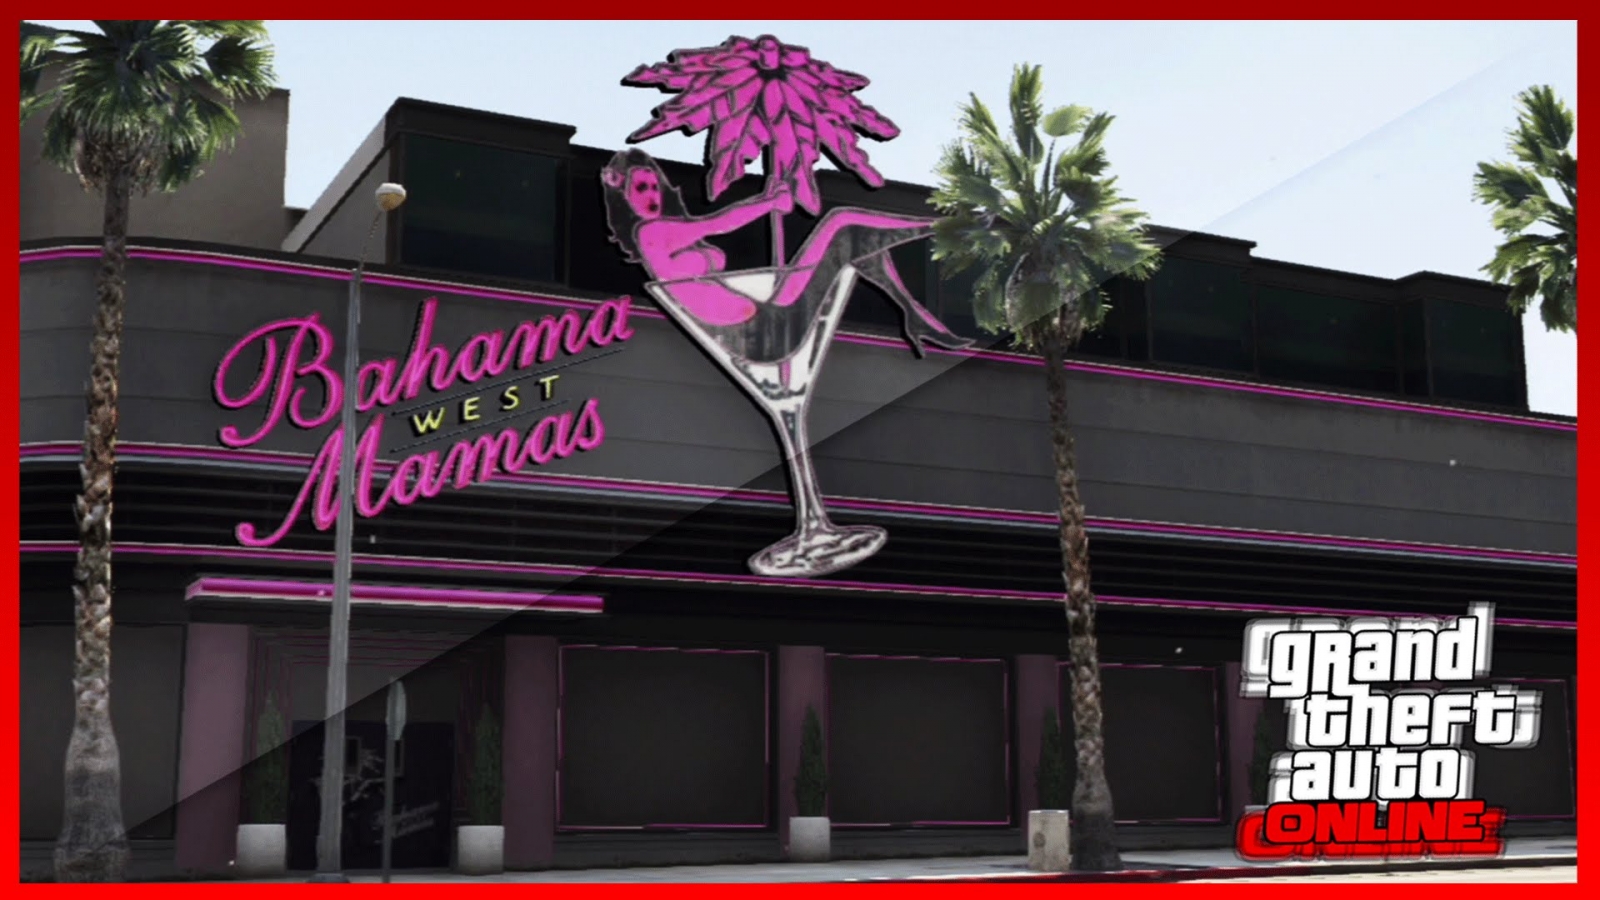 GTA 5 Online secret night club location: How to get inside [Tutorial]